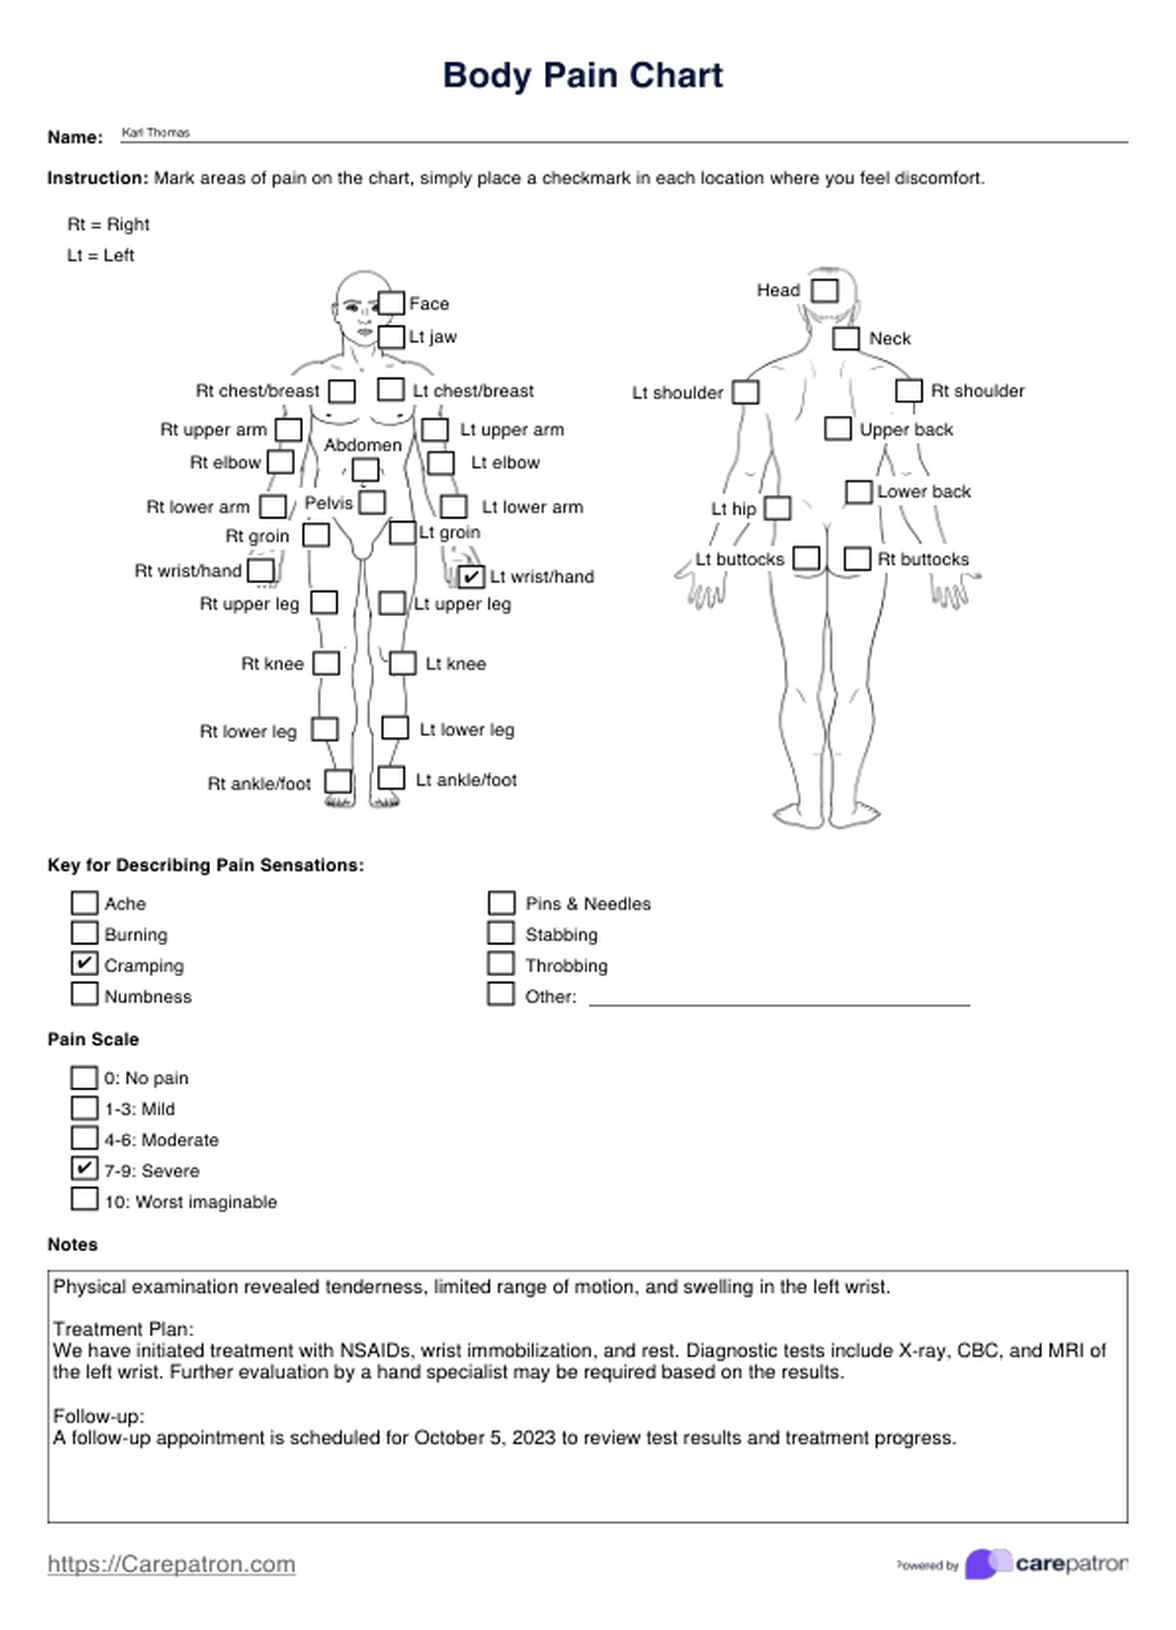 Body Pain Charts PDF Example